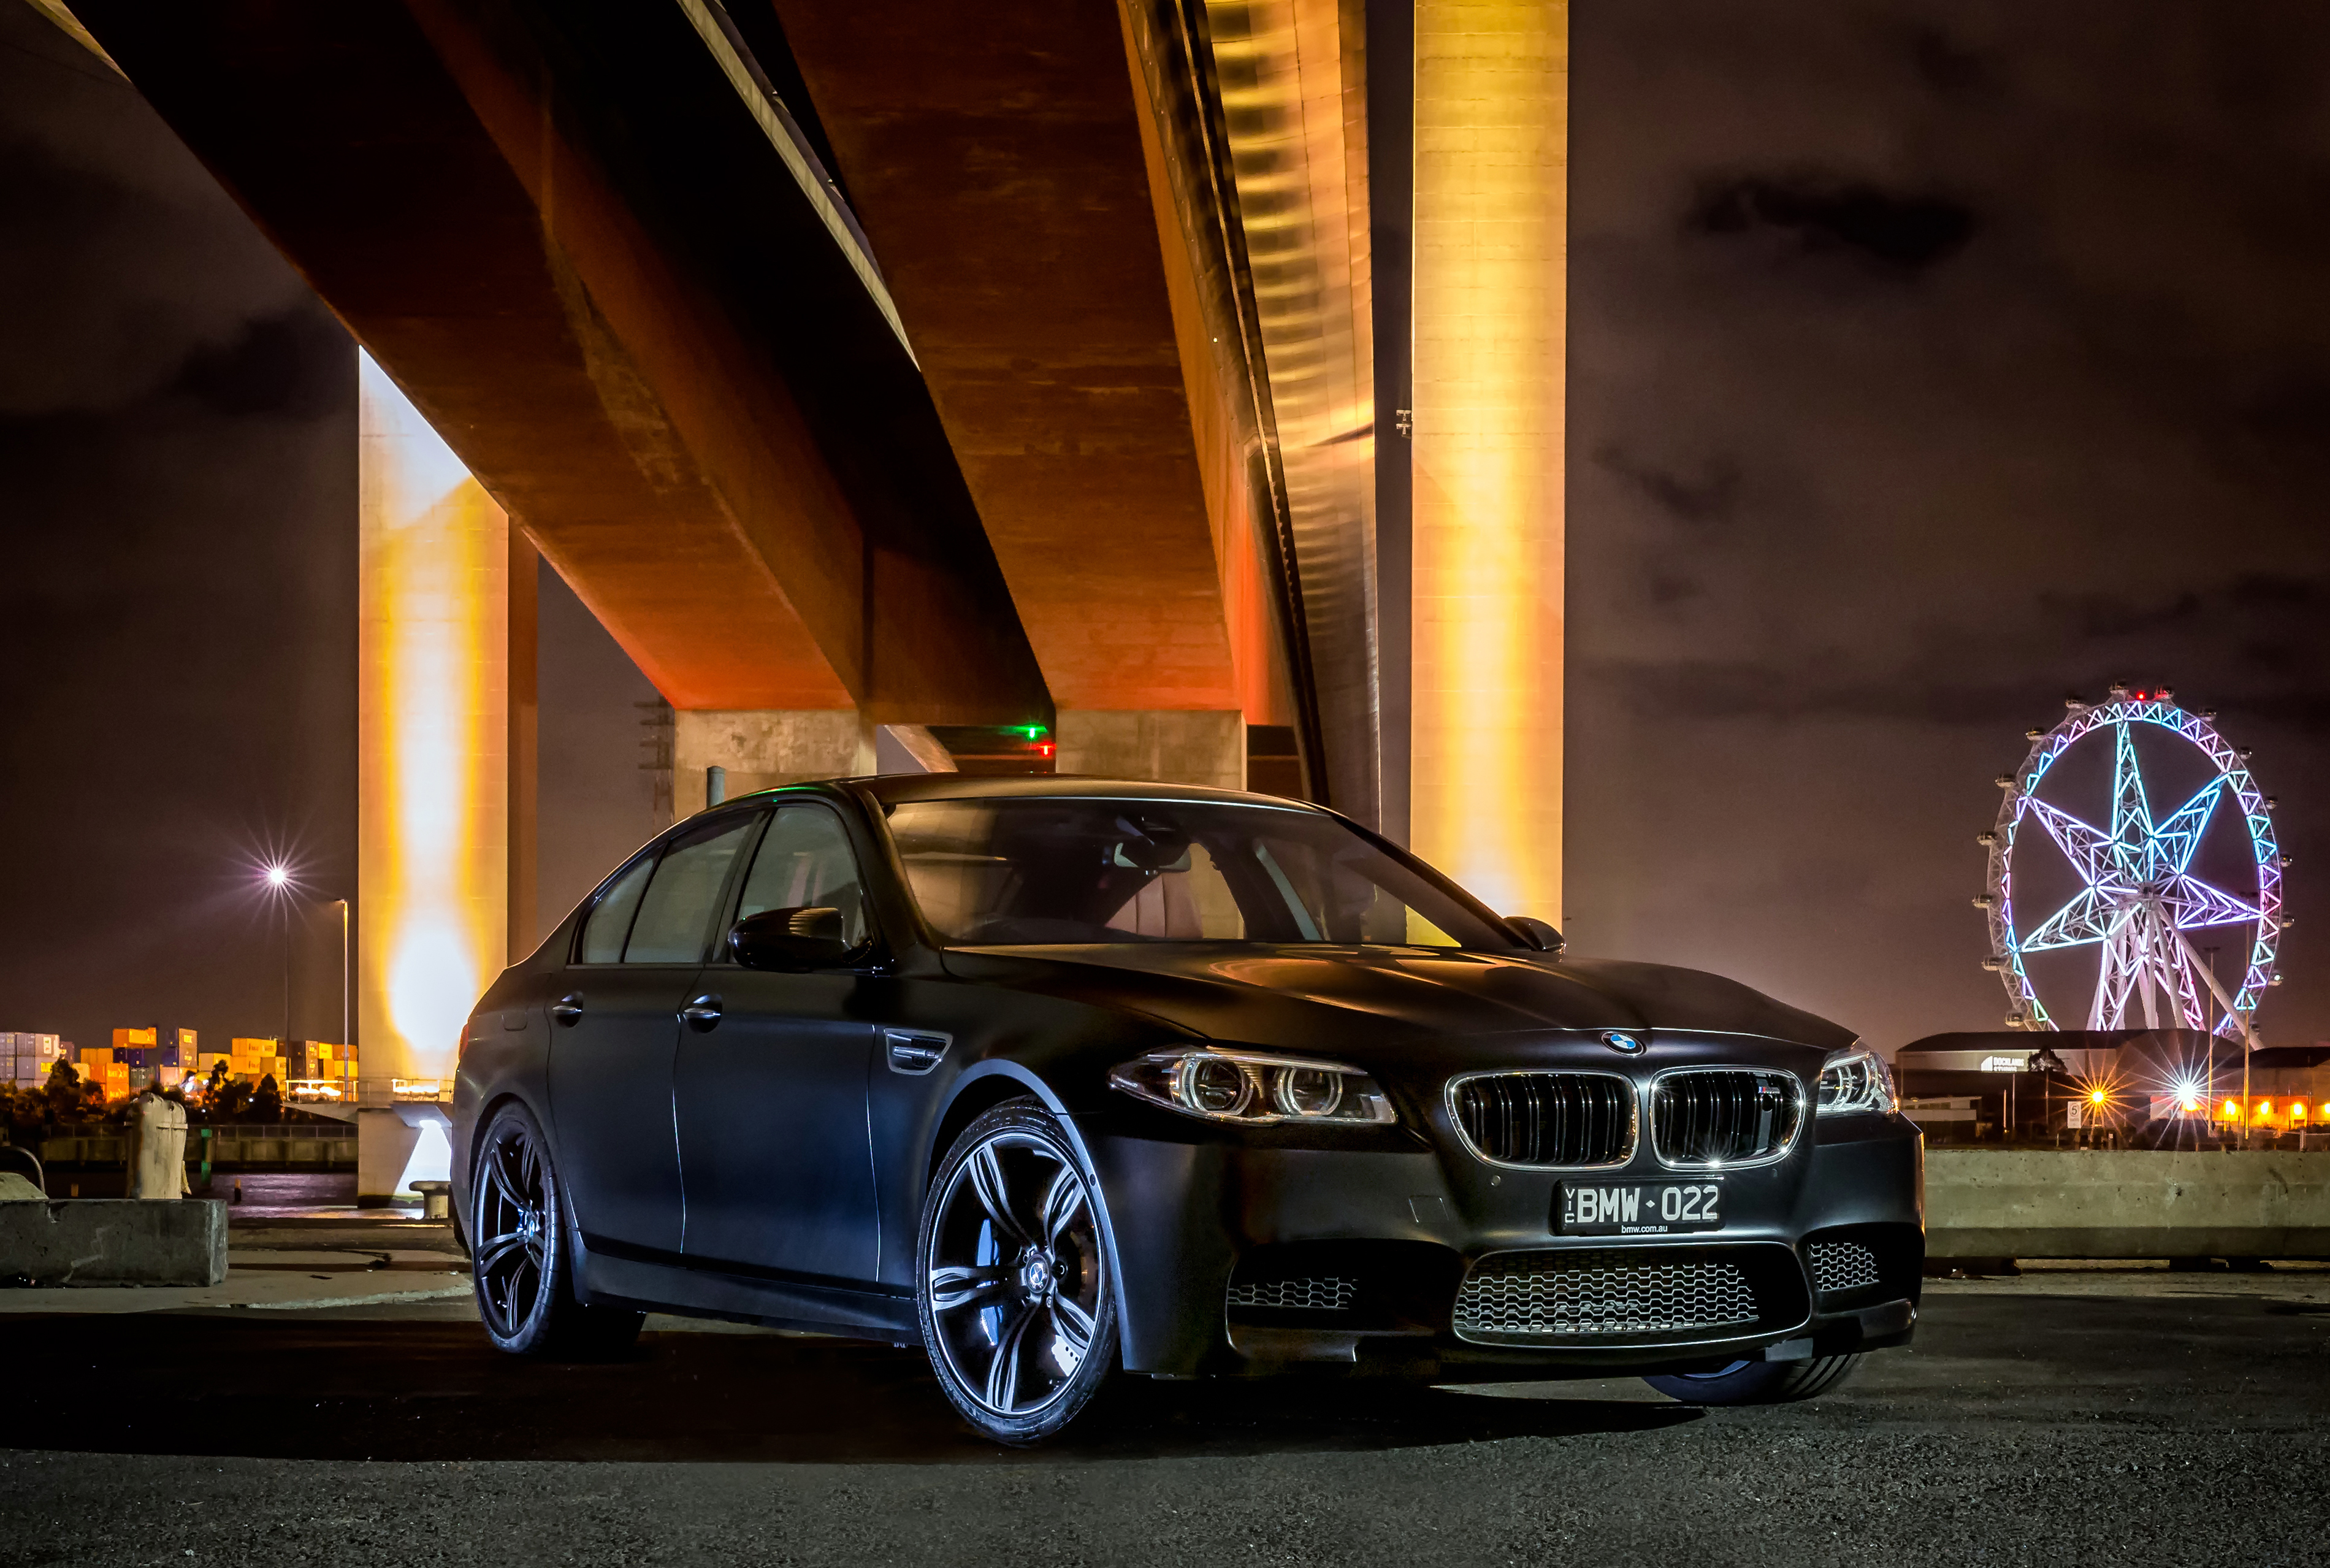 Фото м5 на обои. BMW m5 f10 2015. BMW m5 f90. BMW m5 черная. BMW m5 f10 Black.